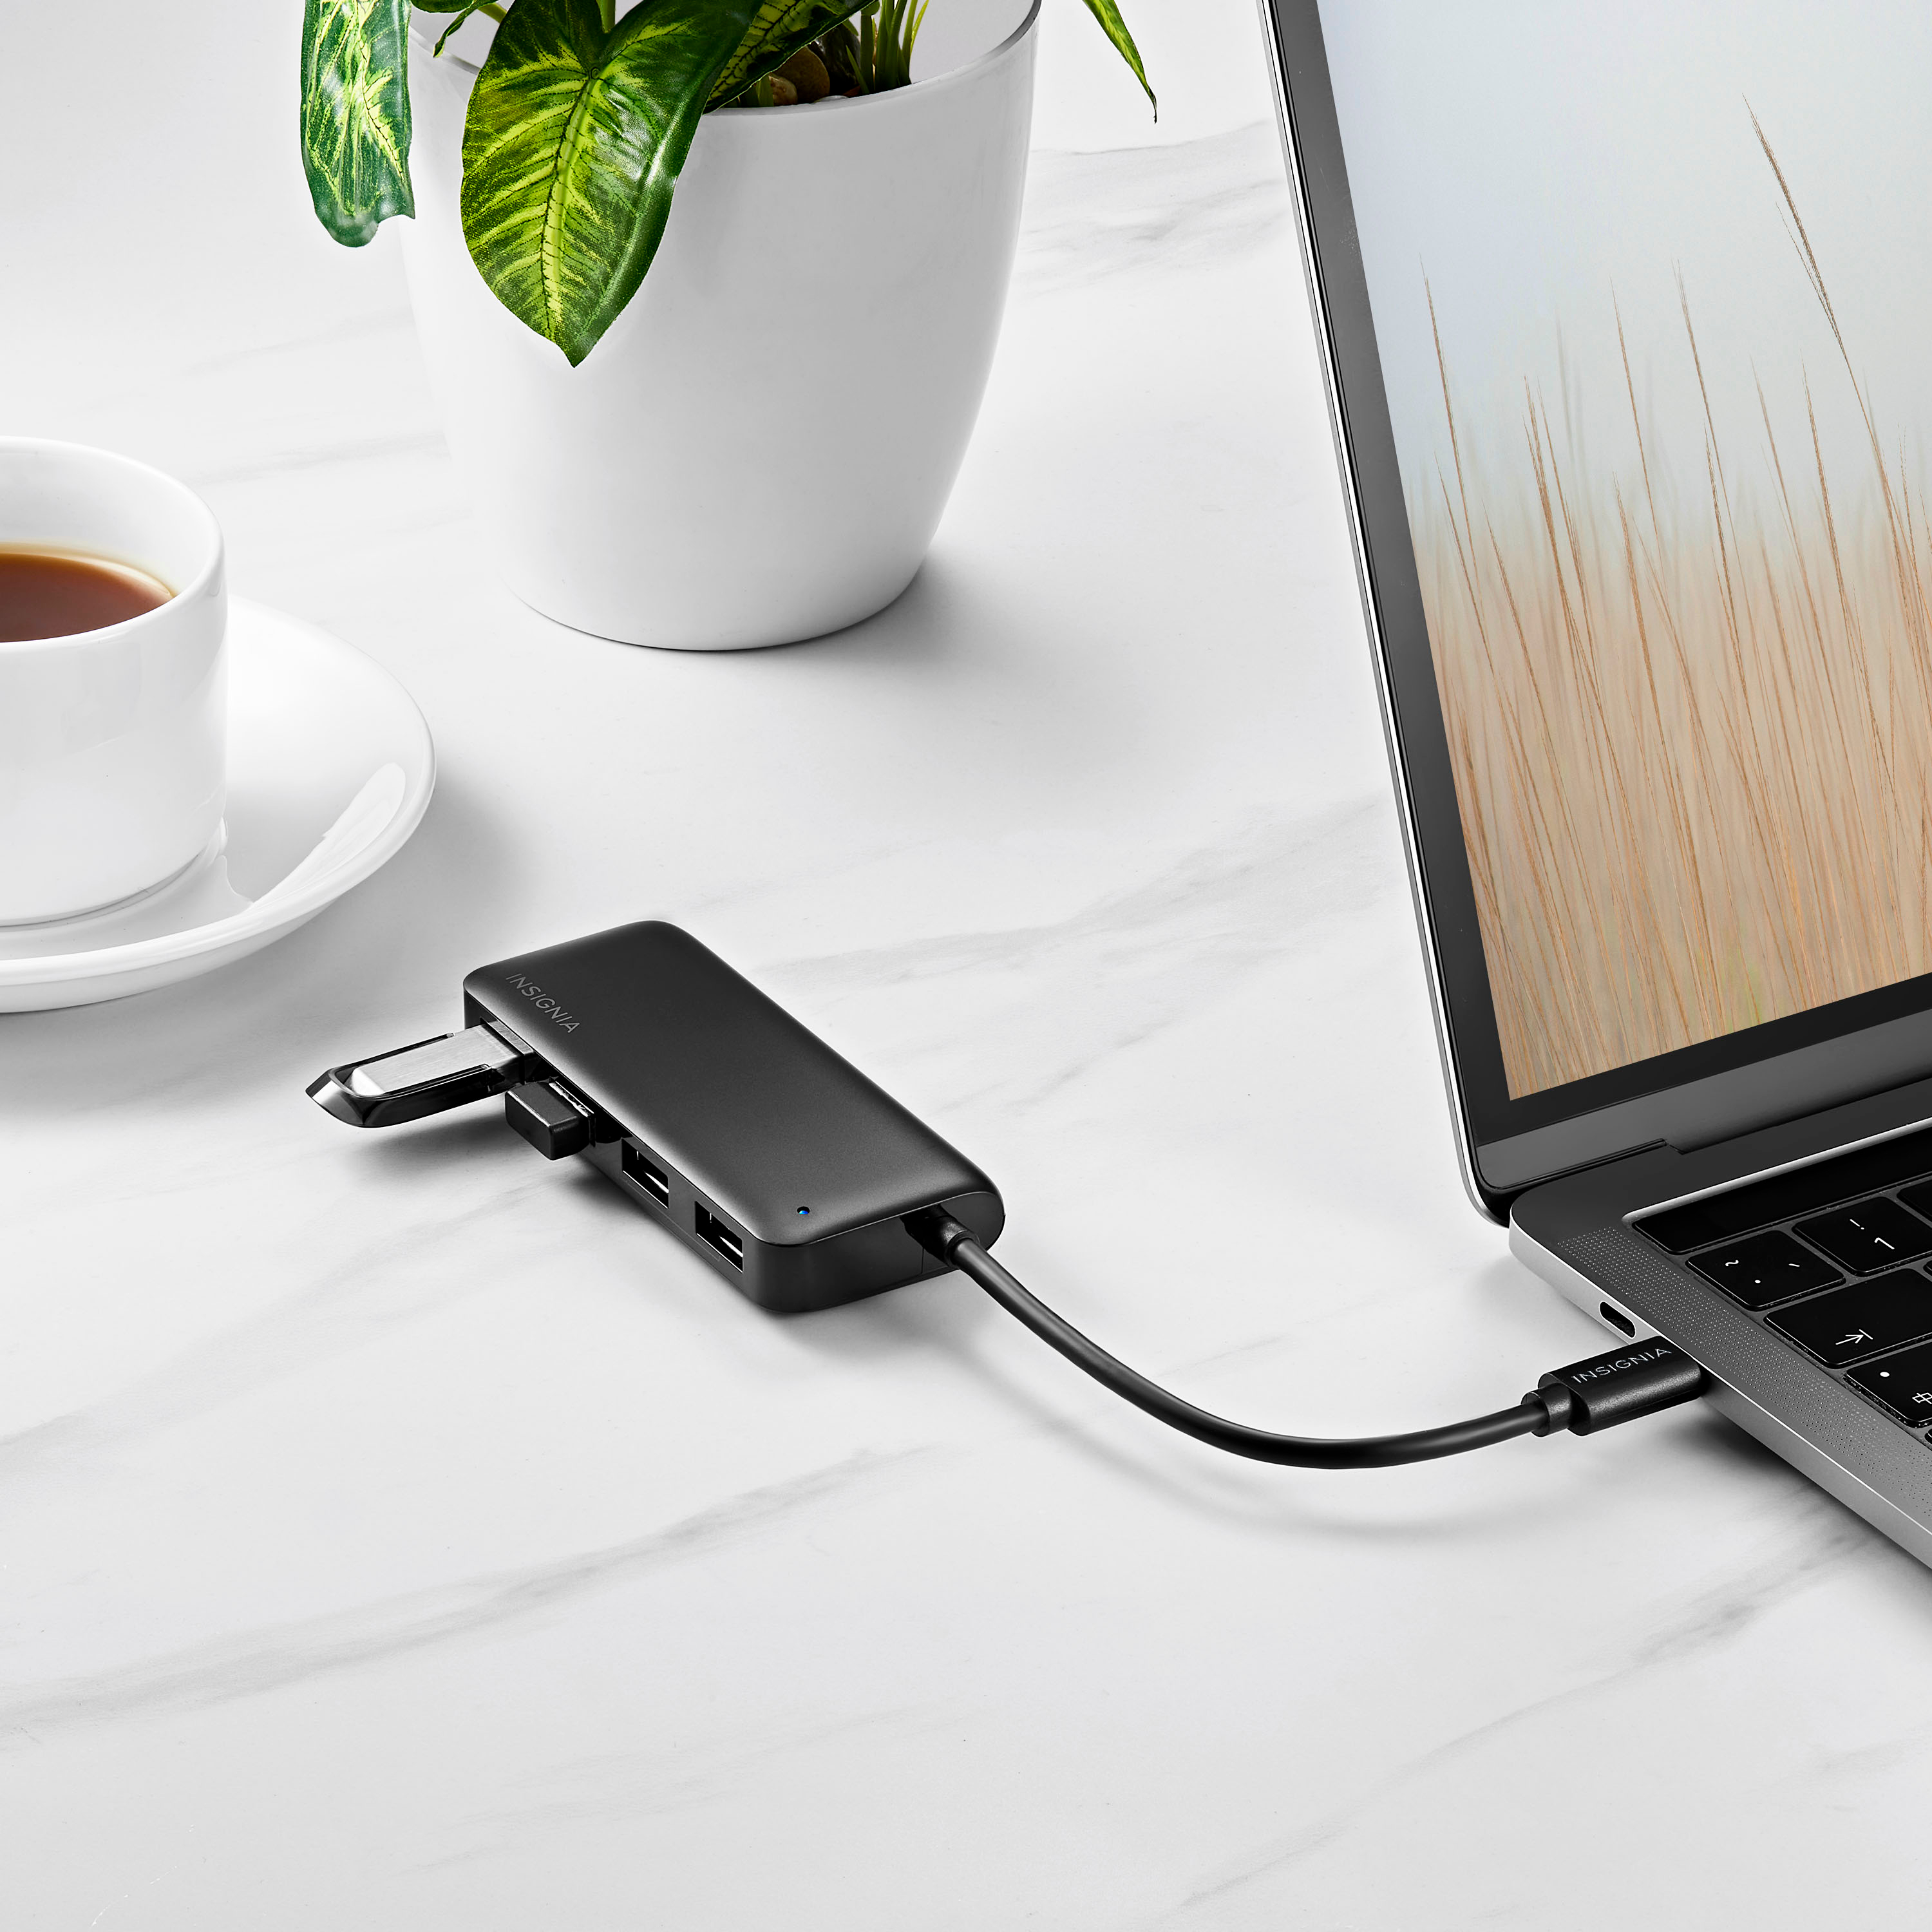 Insignia™ 4-Port USB 3.0 Hub Black NS-PCH5431 - Best Buy